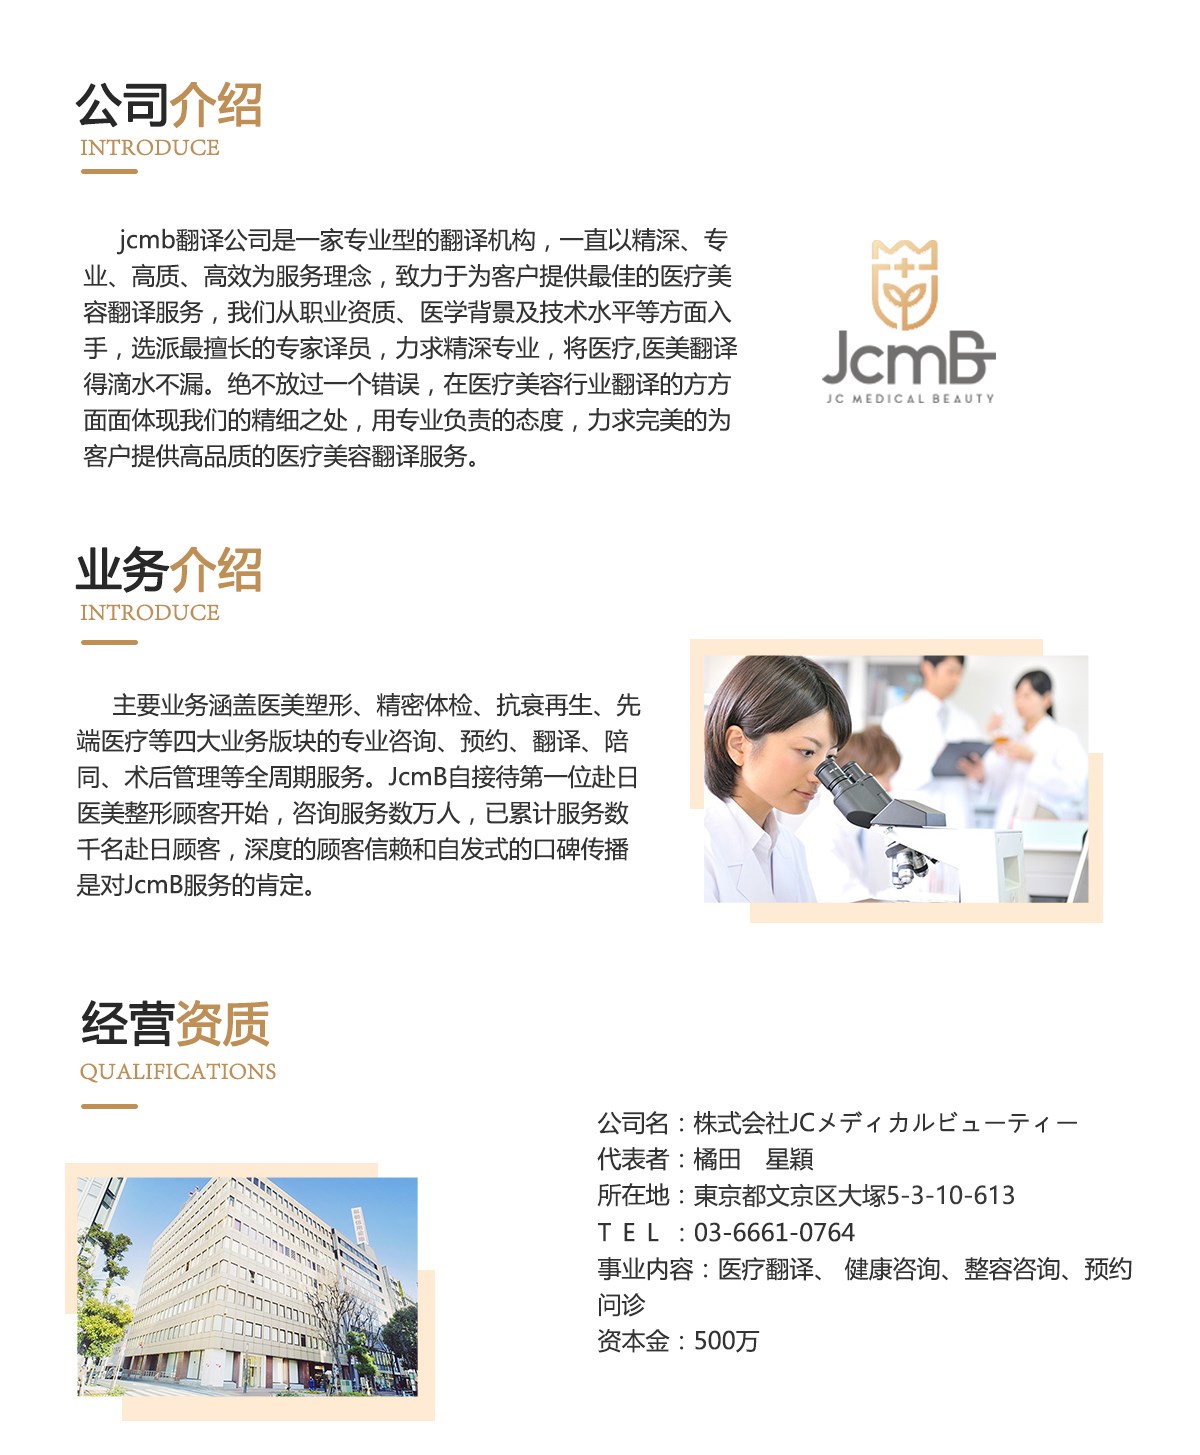 jcmb公司介绍1.jpg